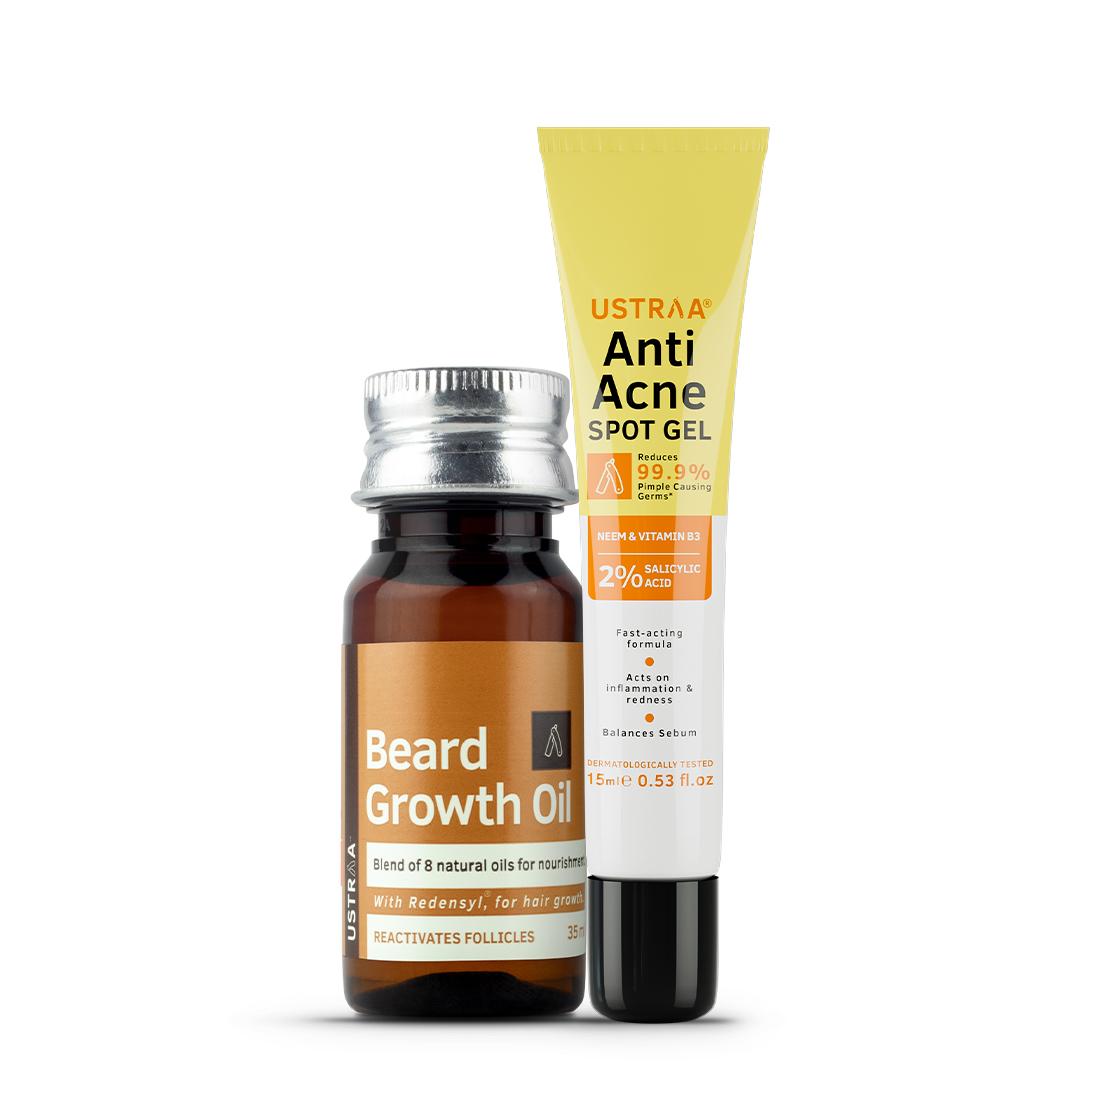 Anti Acne Spot Gel & Beard Growth Oil